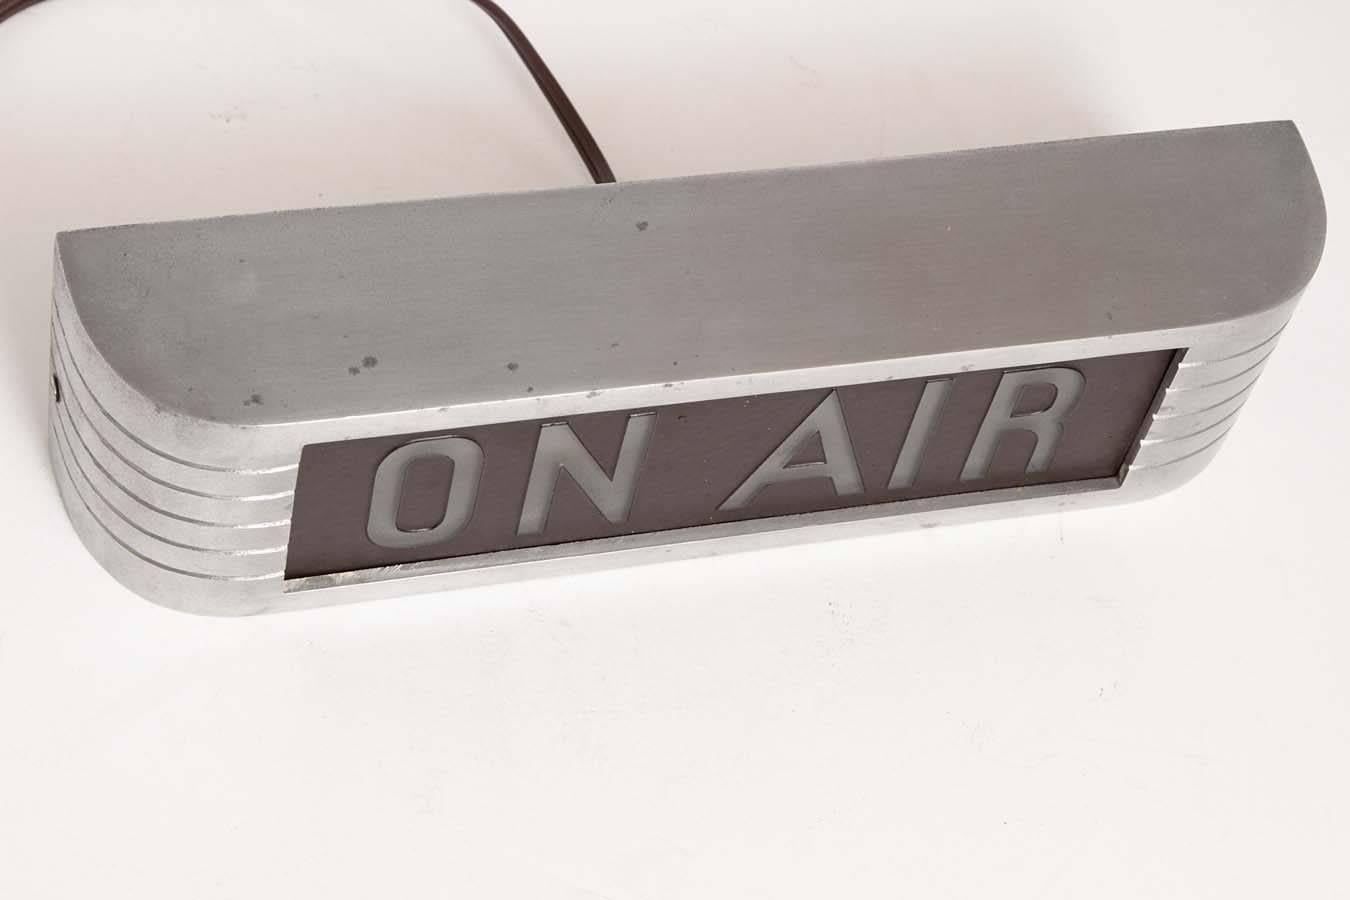 vintage rca on air sign